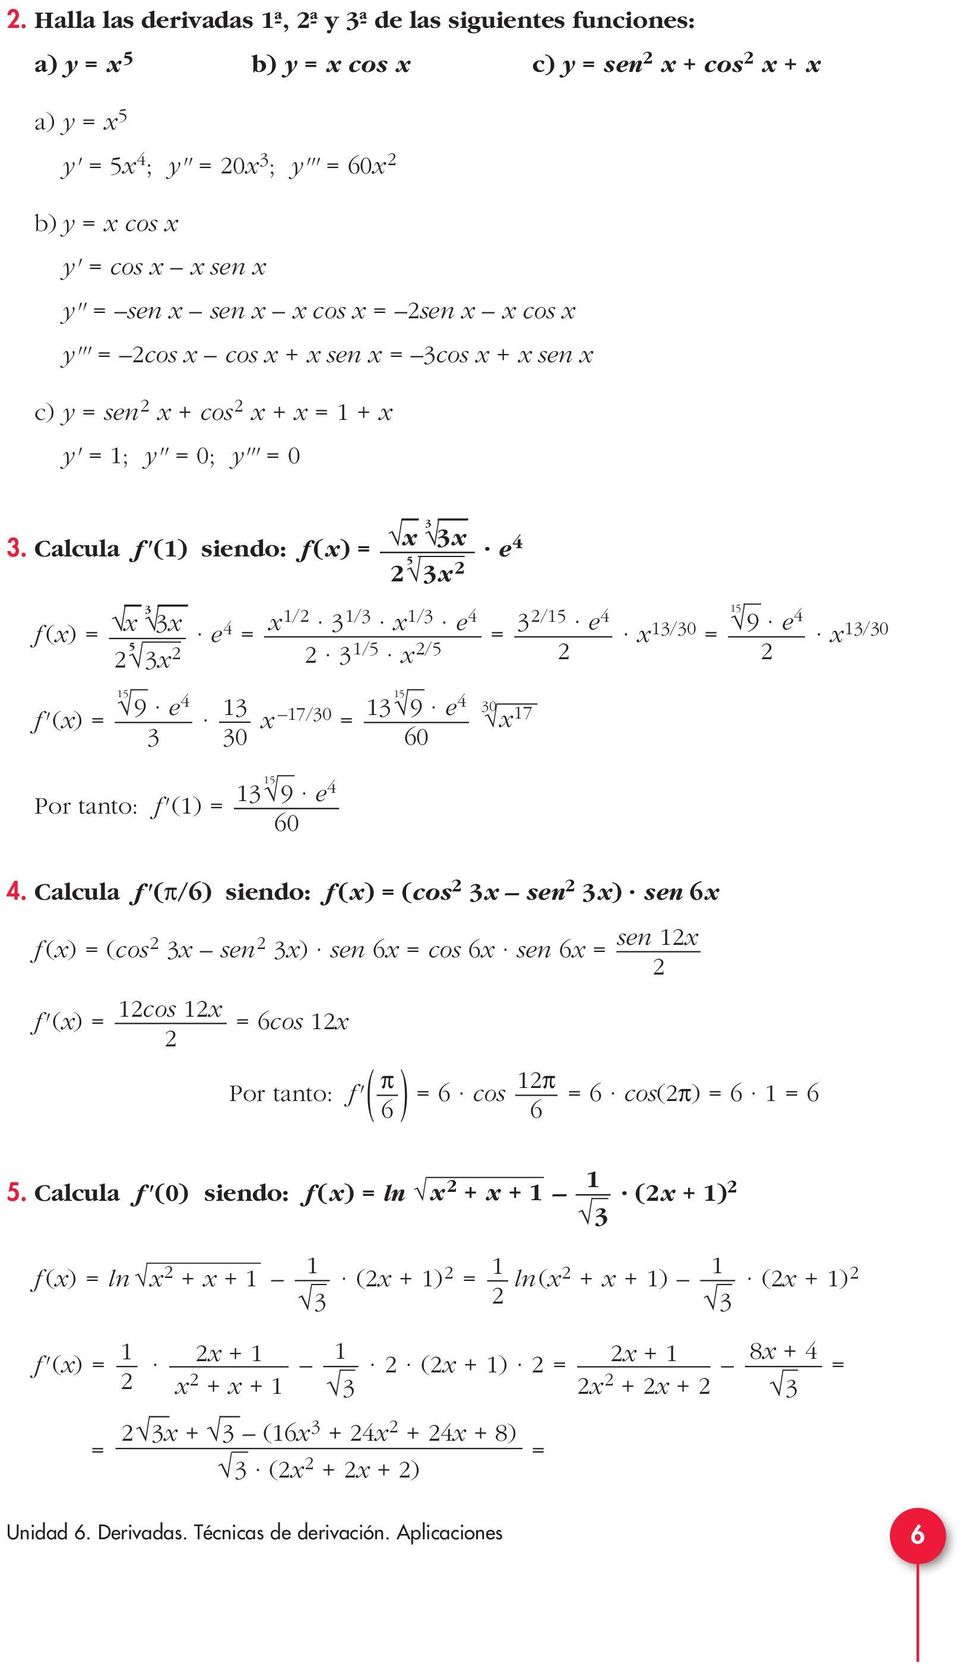 Calcula f'() siendo: f () e 5 5 f () e / / / e /5 e /0 9 e /0 5 /5 /5 5 9 e f'() 7/0 0 5 9 e 60 0 7 Por tanto: f'() 5 9 e 60.